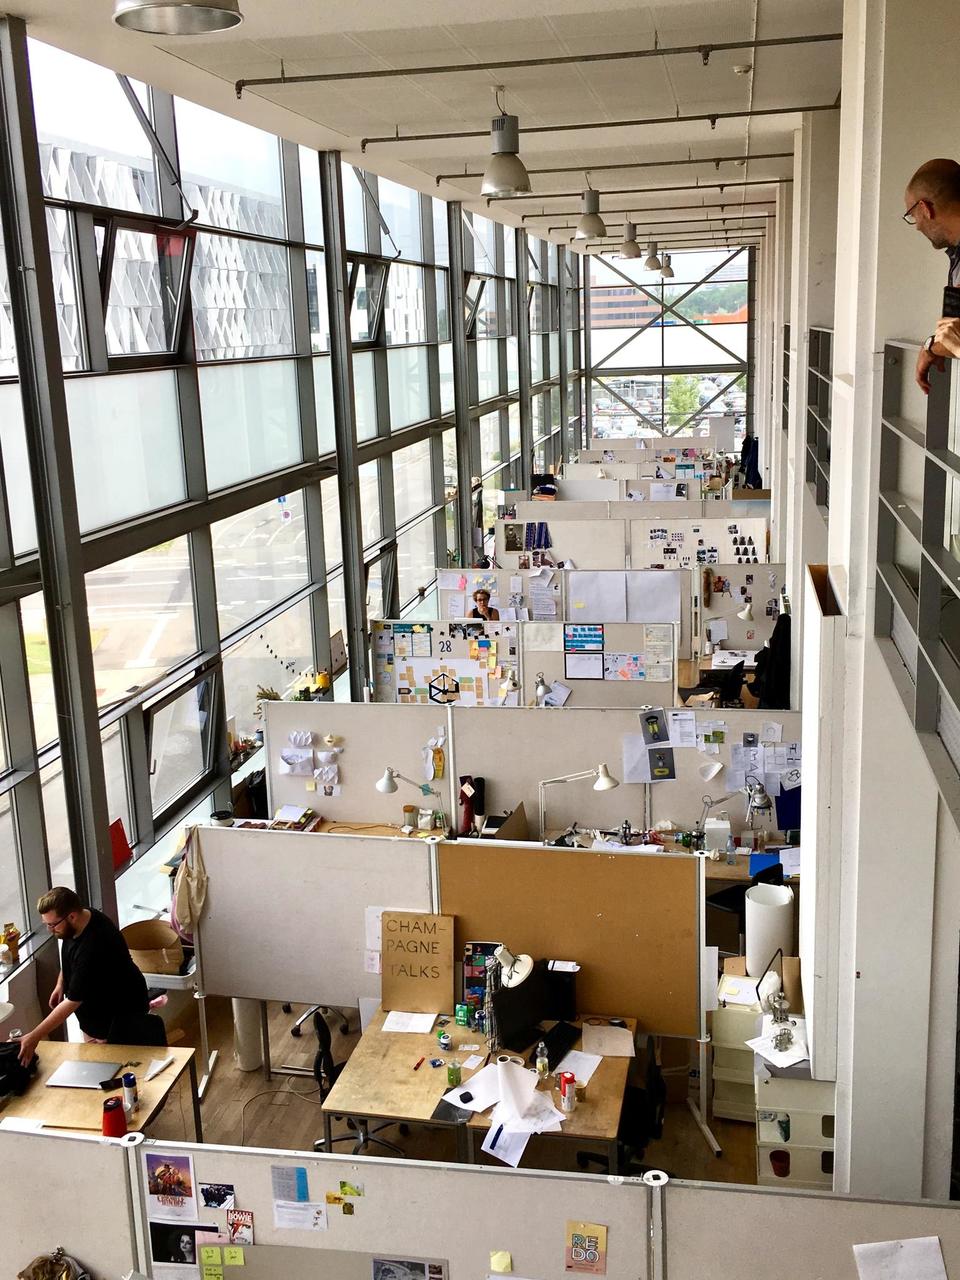 Experiencing Design Driven Innovation in Kolding,
Denmark